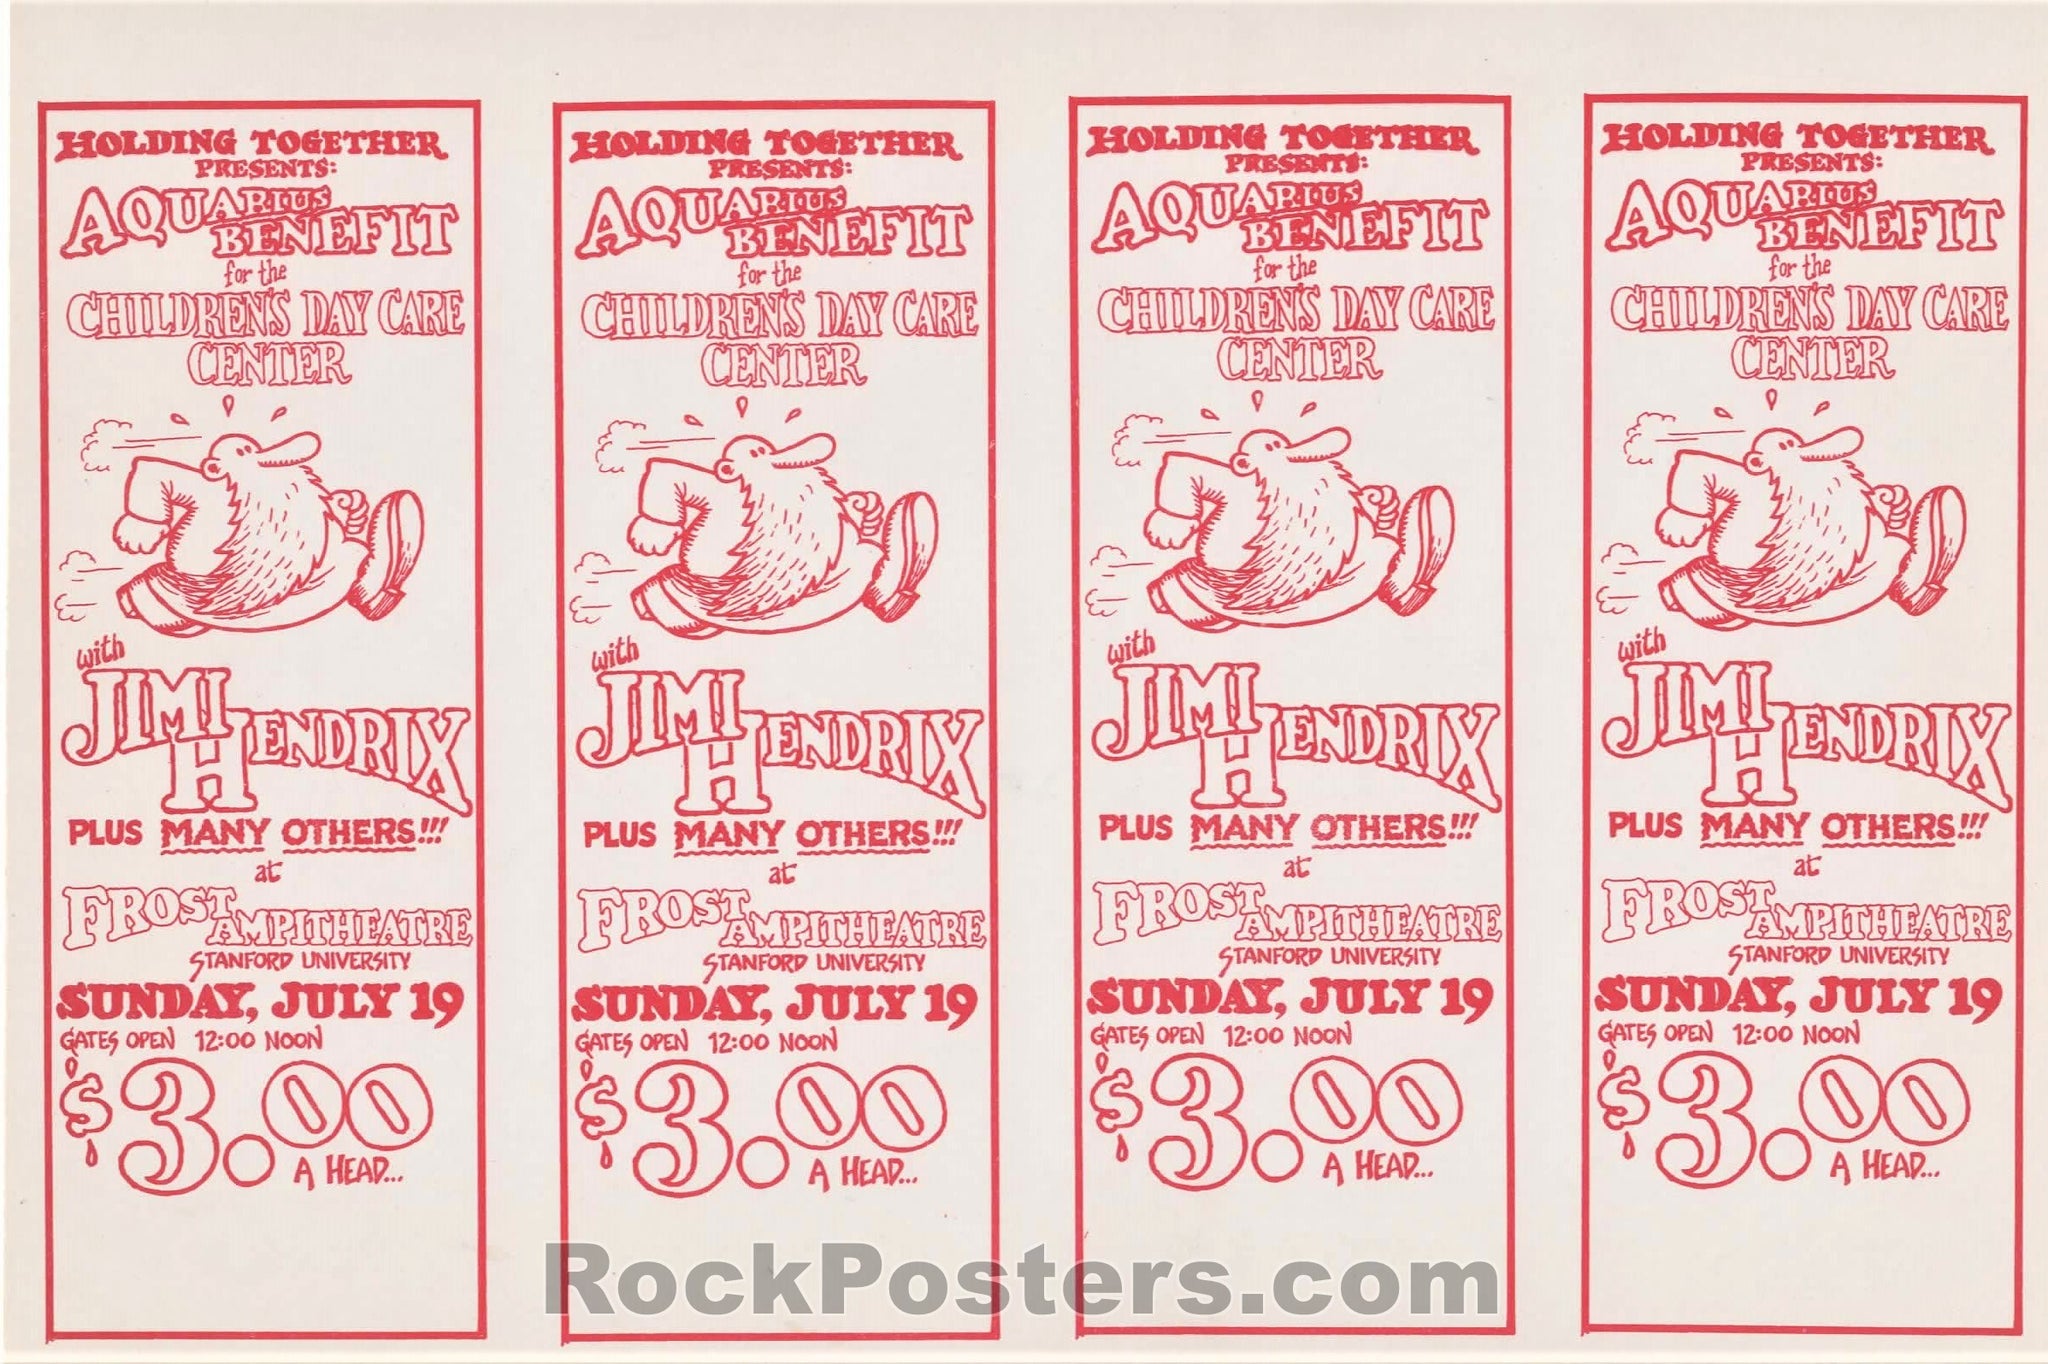 AUCTION - Jimi Hendrix - Frost Stanford - Unused 1970 Ticket Sheet - Near Mint Minus